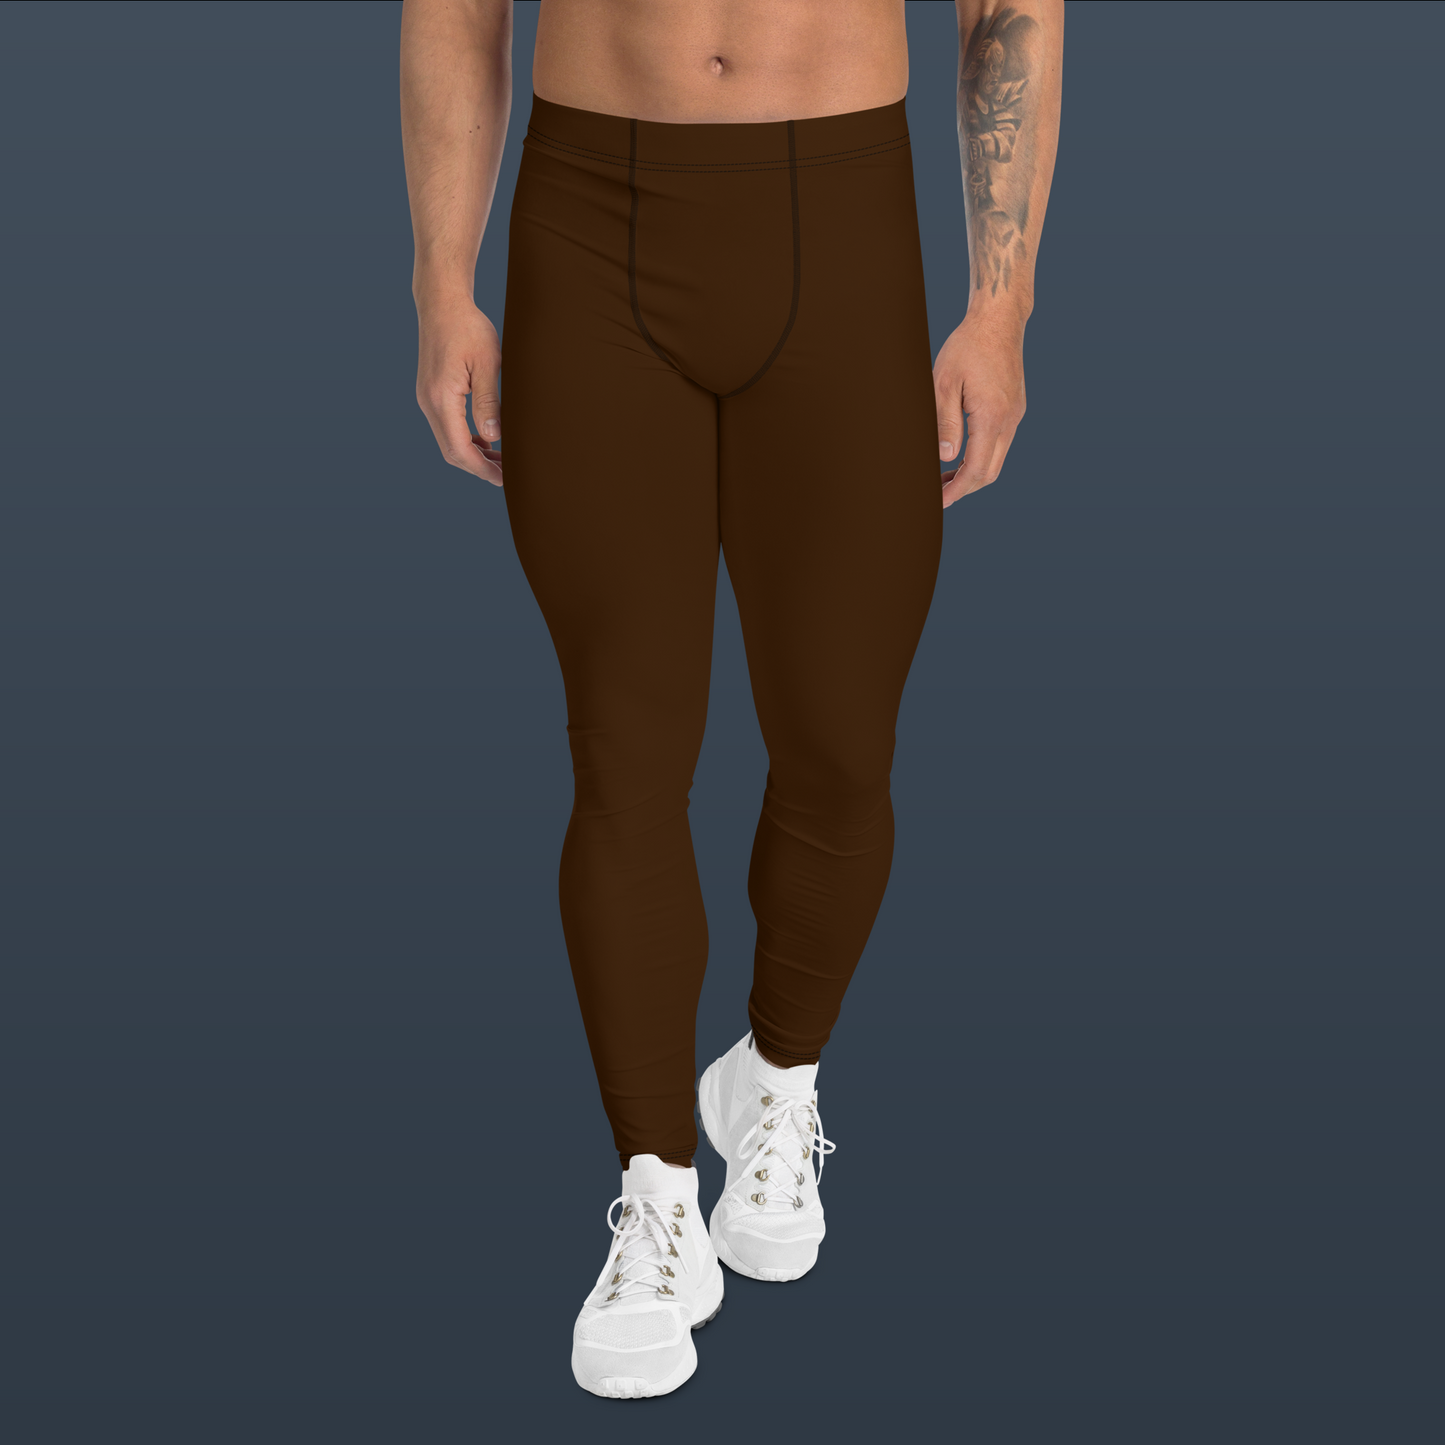 Men's Athletic Leggings (Dark Brown)